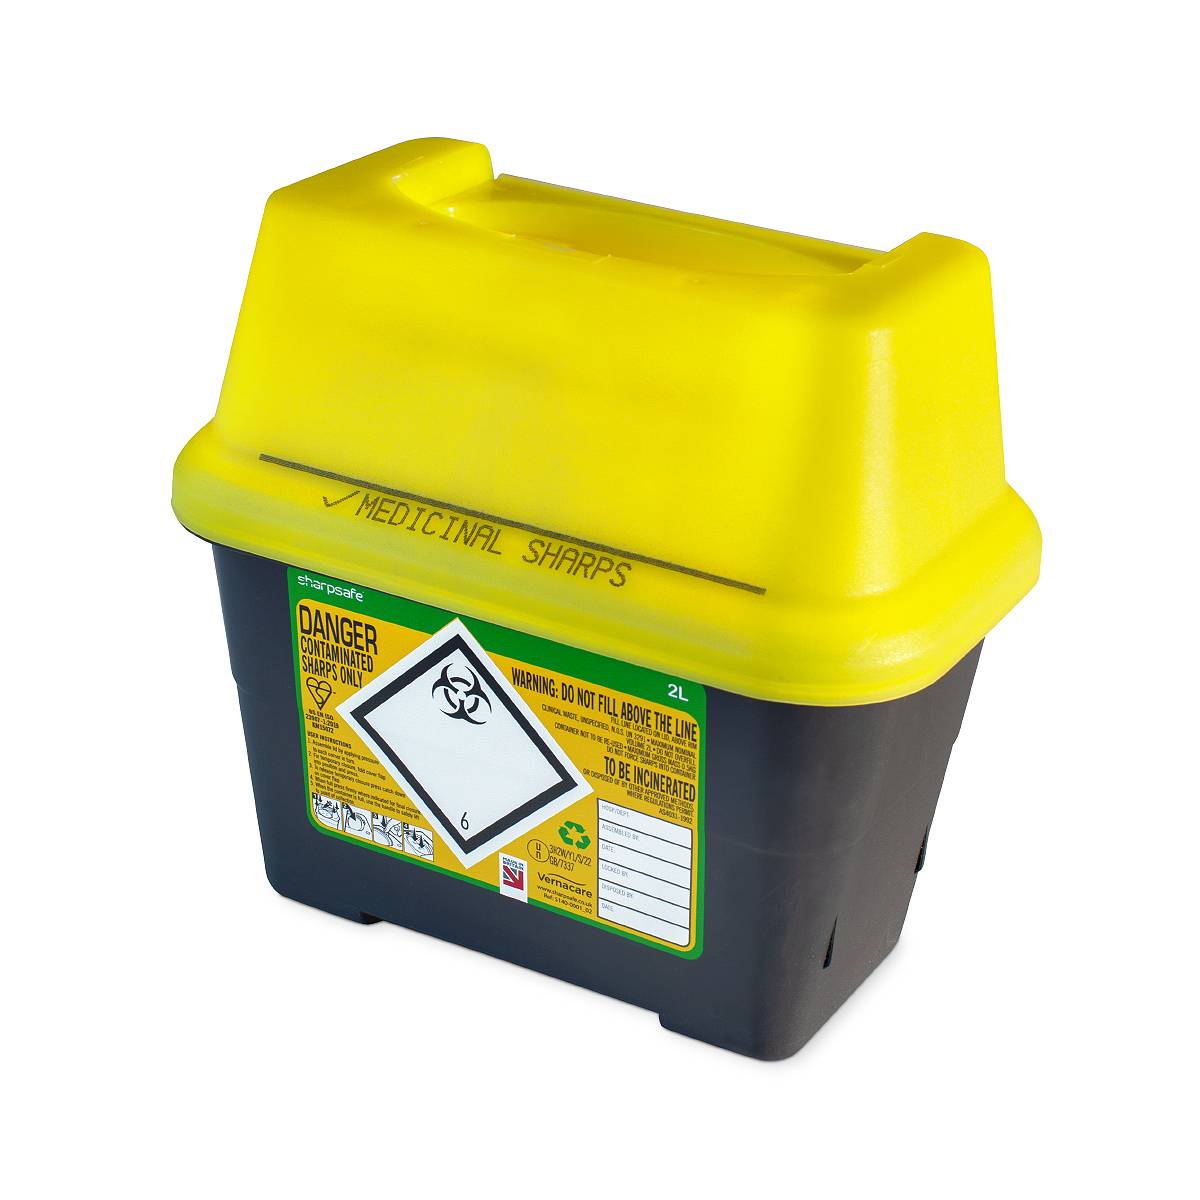 Frontier 2 litre Sharpsafe Yellow sharps bin - UKMEDI